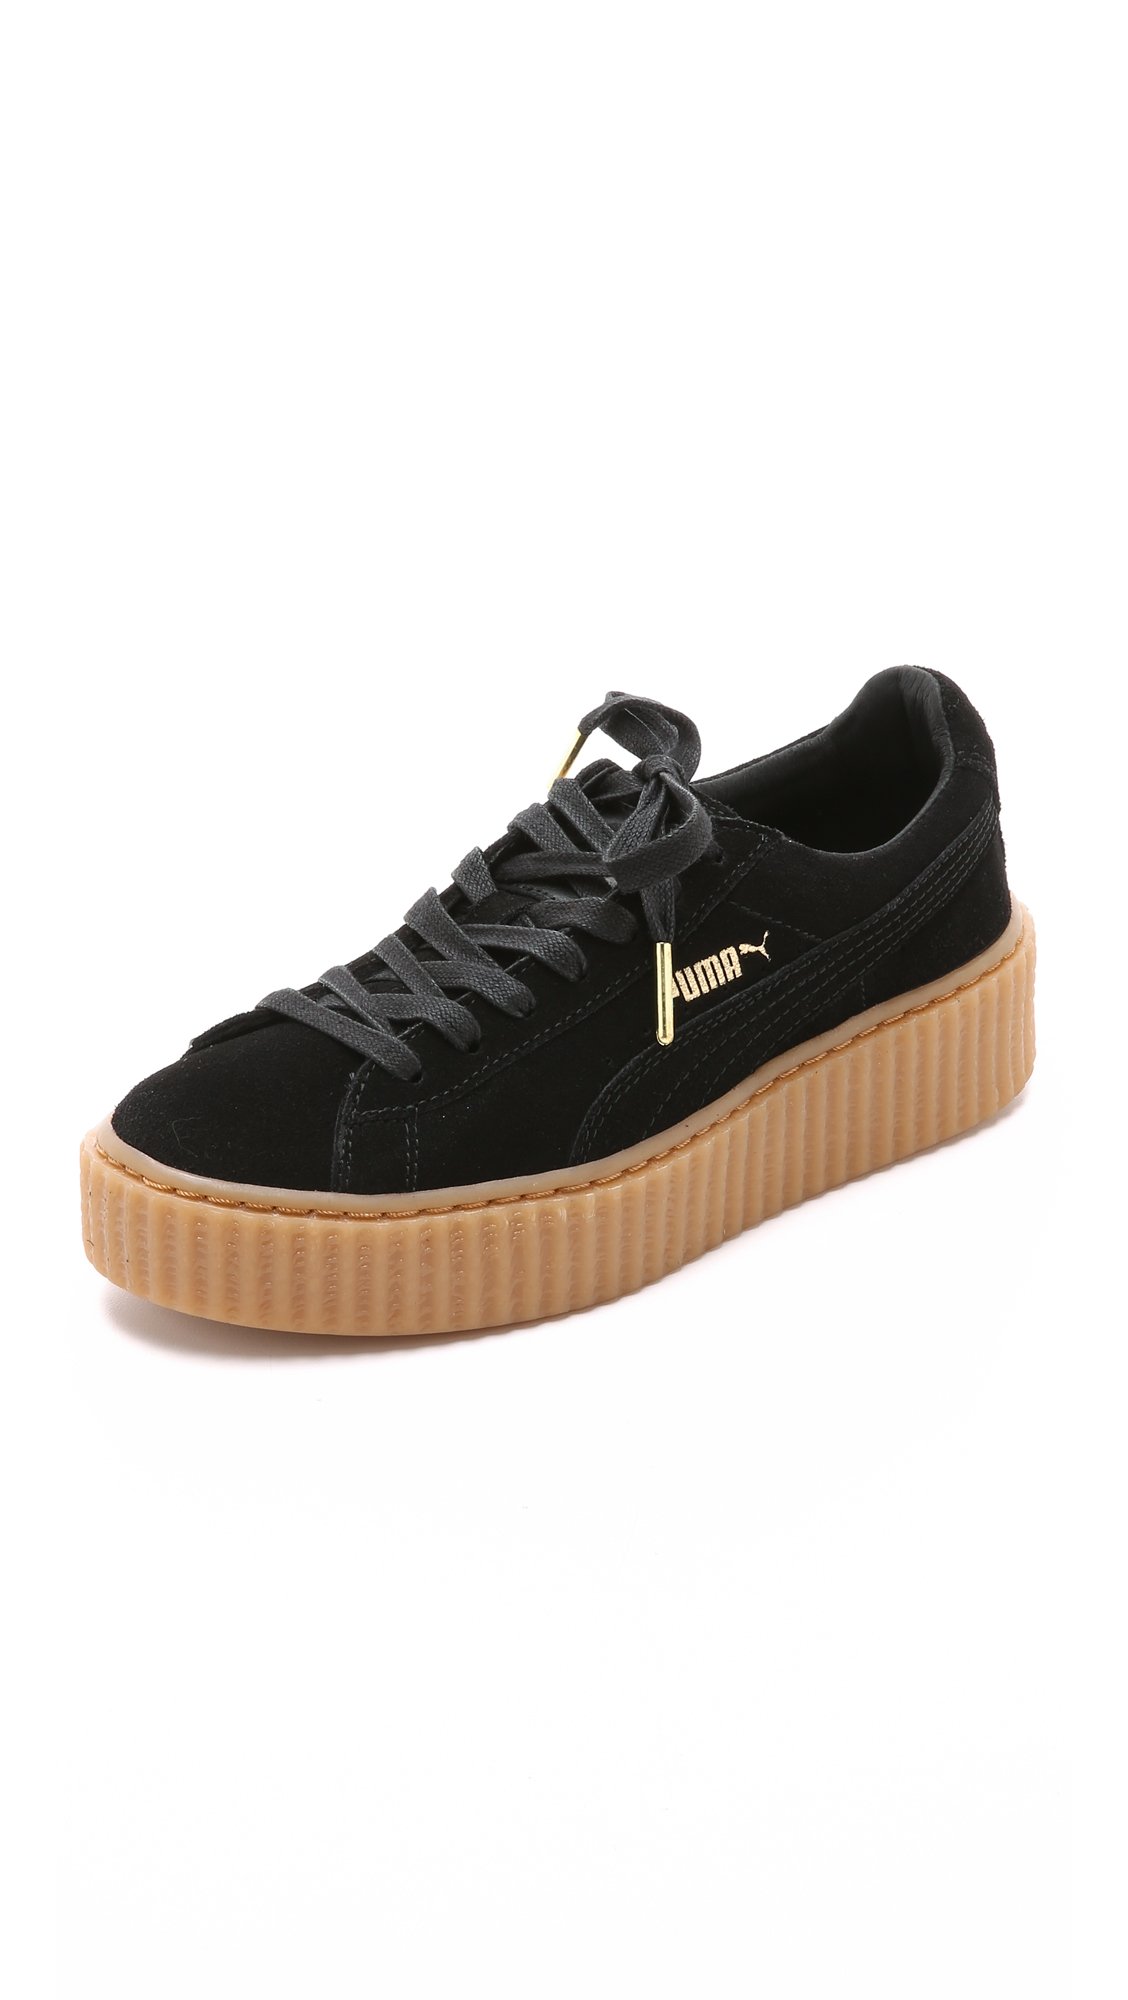 PUMA X Rihanna Creeper Sneakers - Black/gum | Lyst